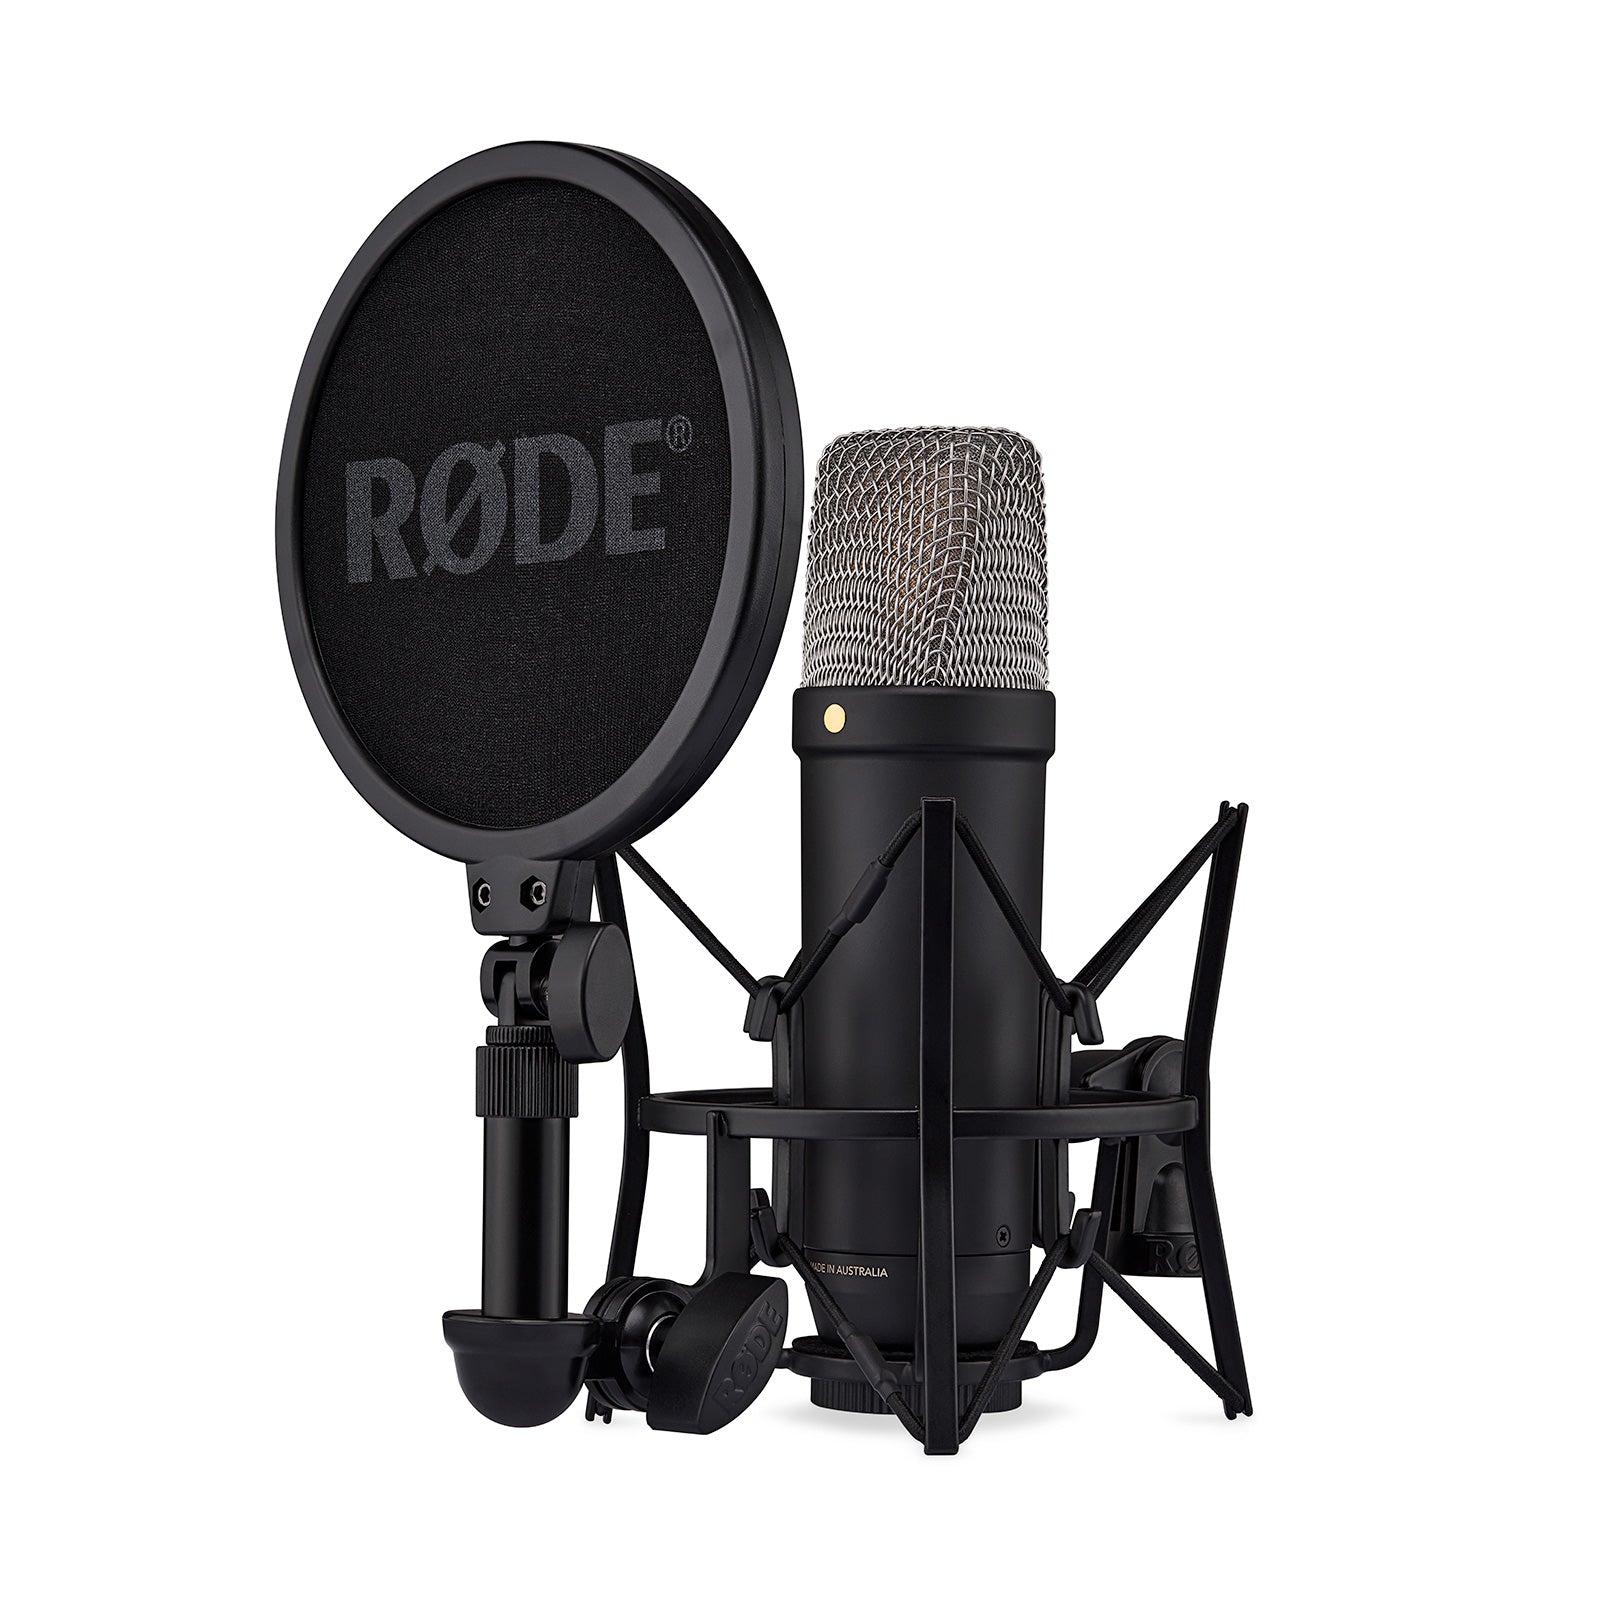 RODE(ロード) NT1 GEN 5 スタジオコンデンサーマイクロフォン ブラック